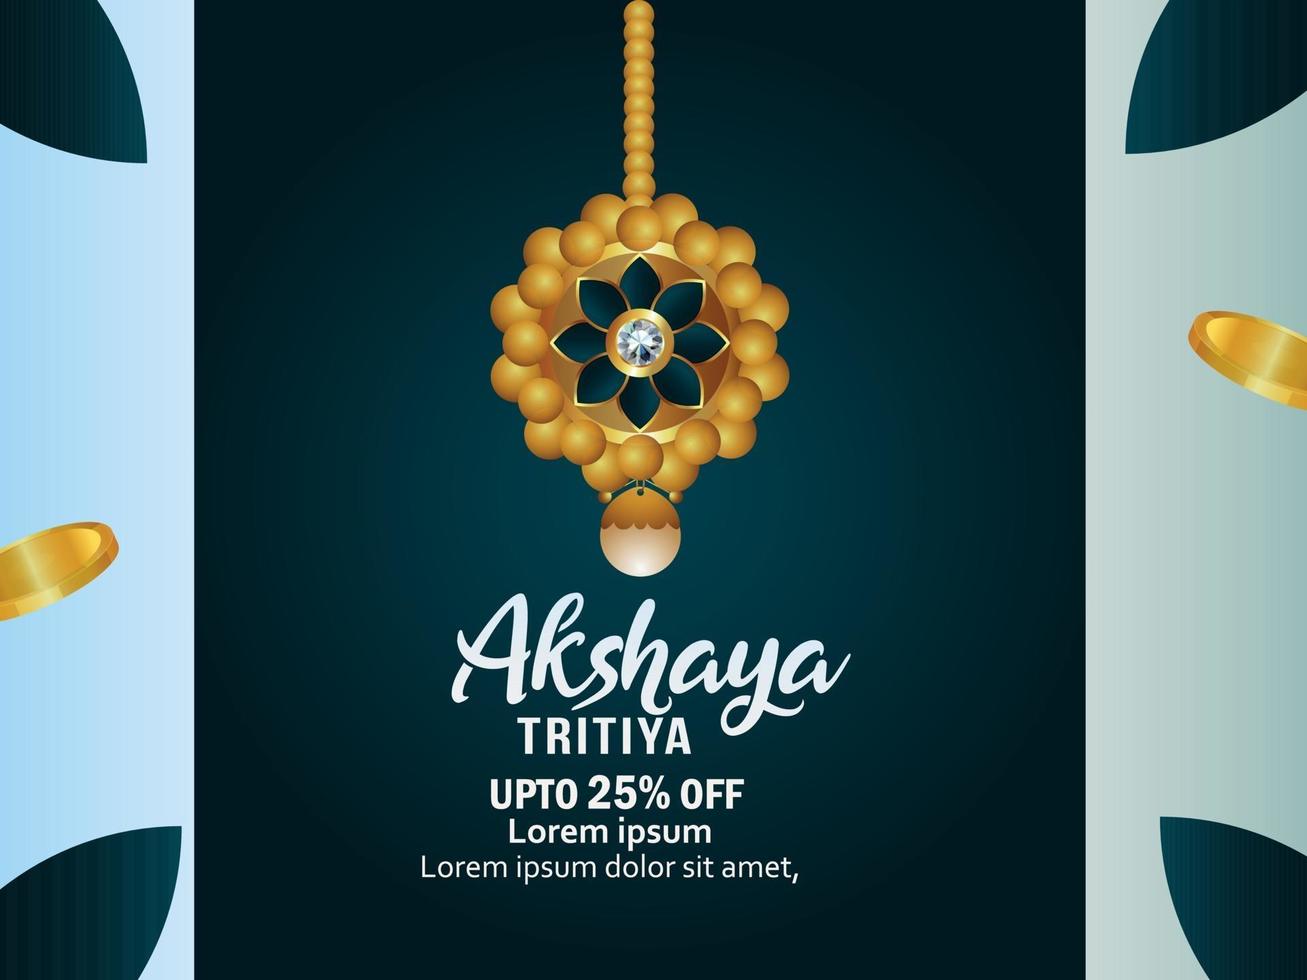 Indian festival akshaya tritiya sale promotion background with gold vector illustration